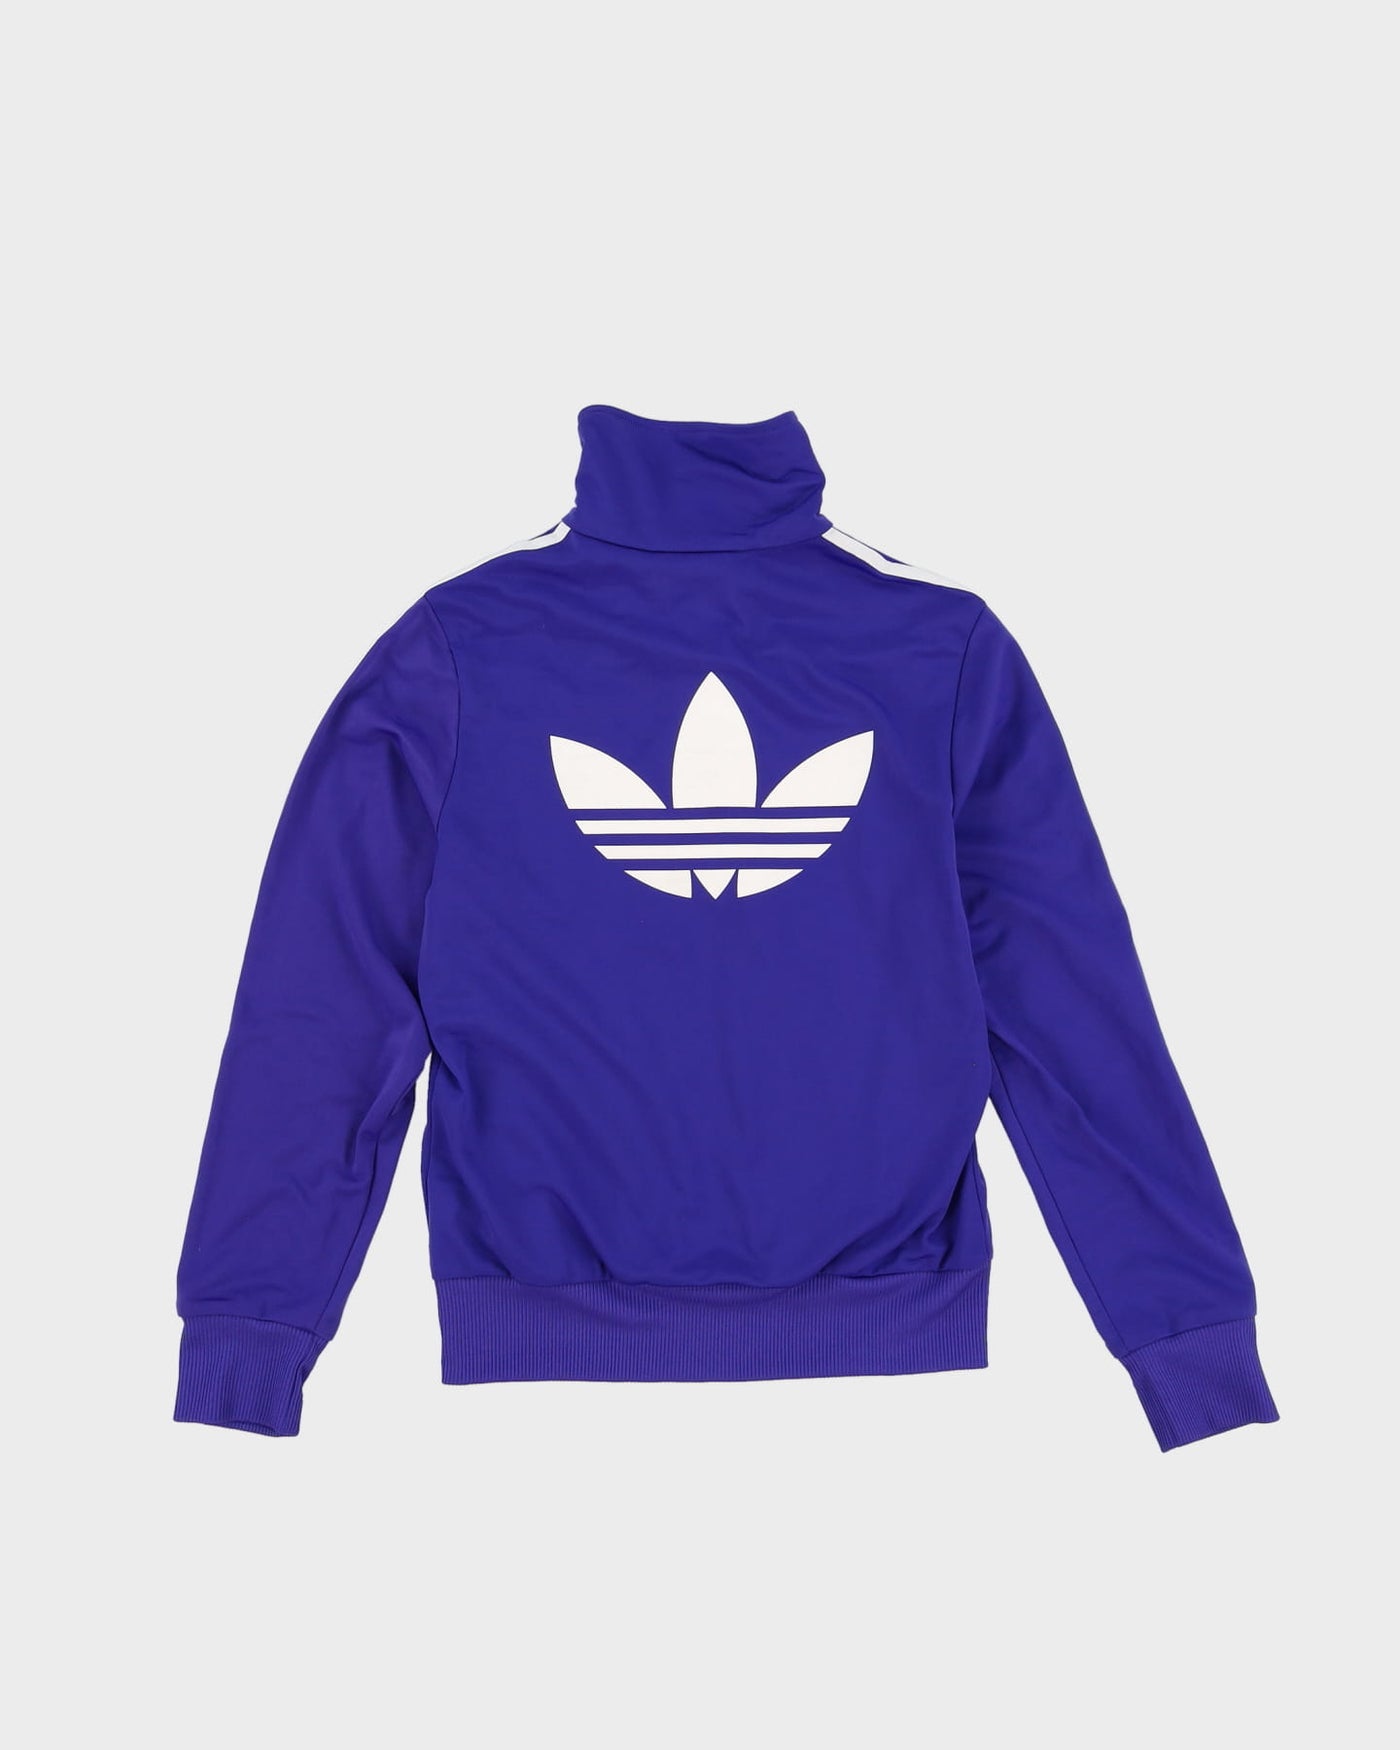 Adidas Purple / White Track Jacket - S